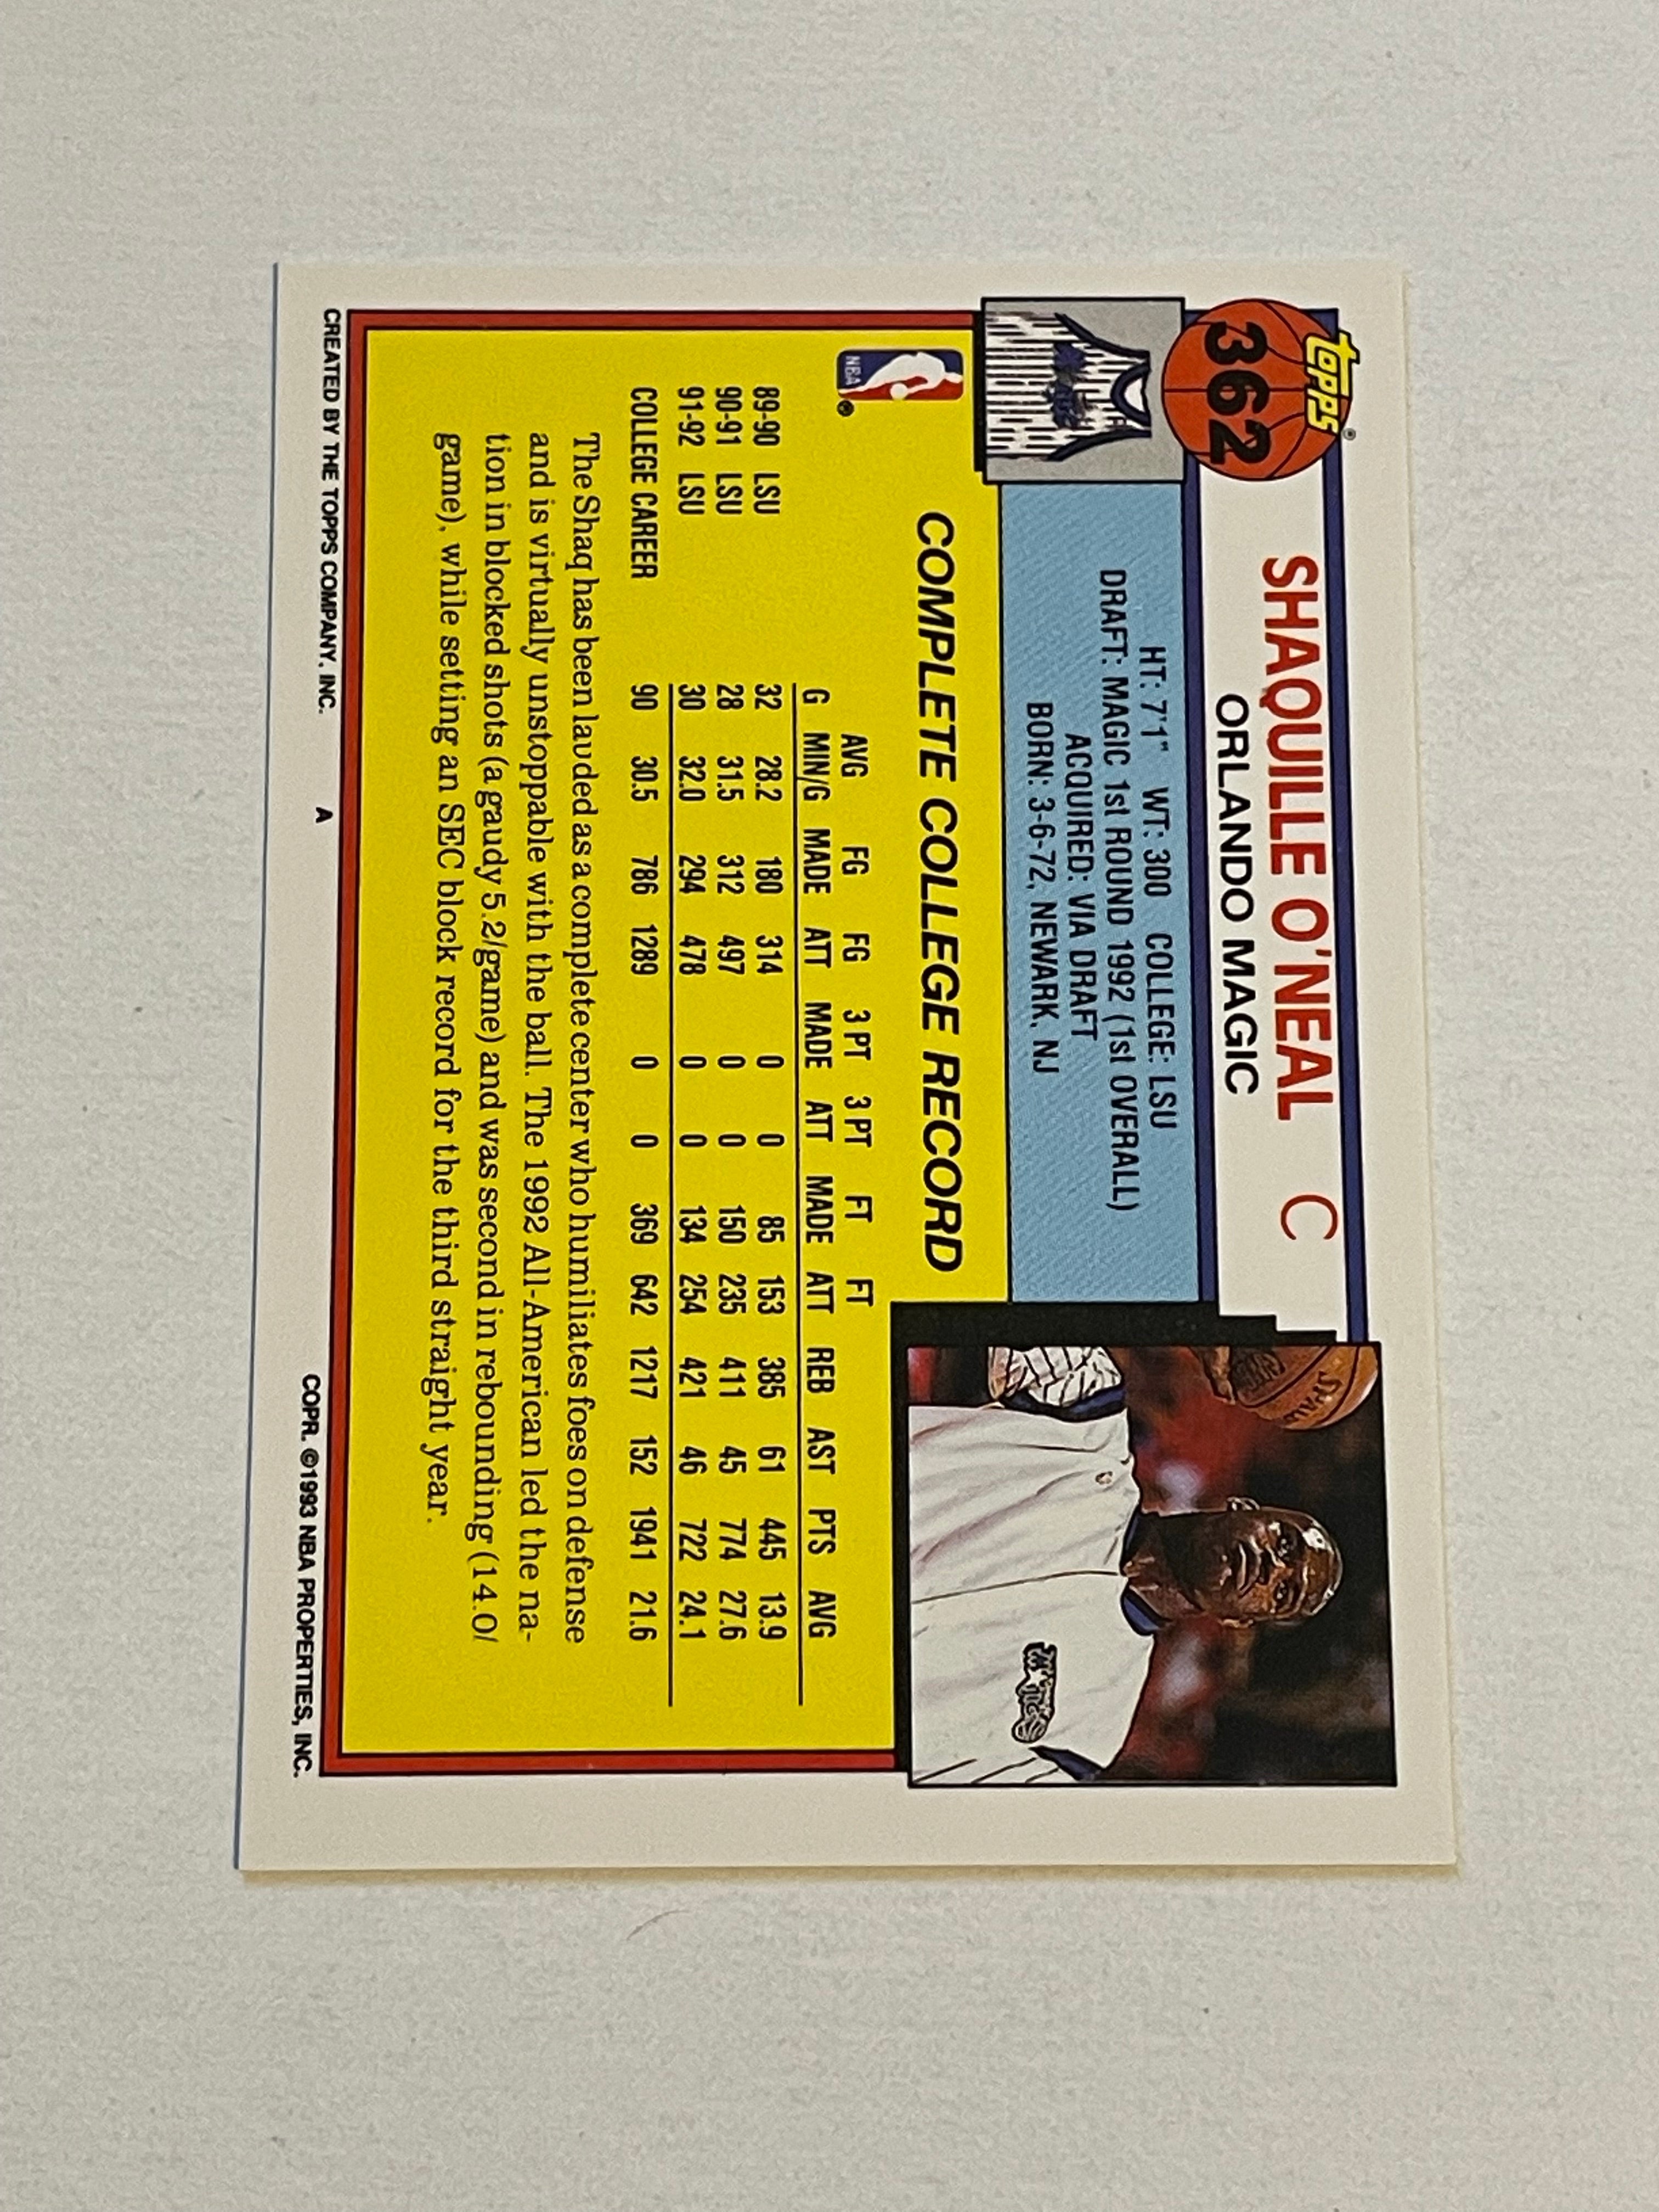 Shaq O’Neal Topps basketball high grade condition rookie card 1992